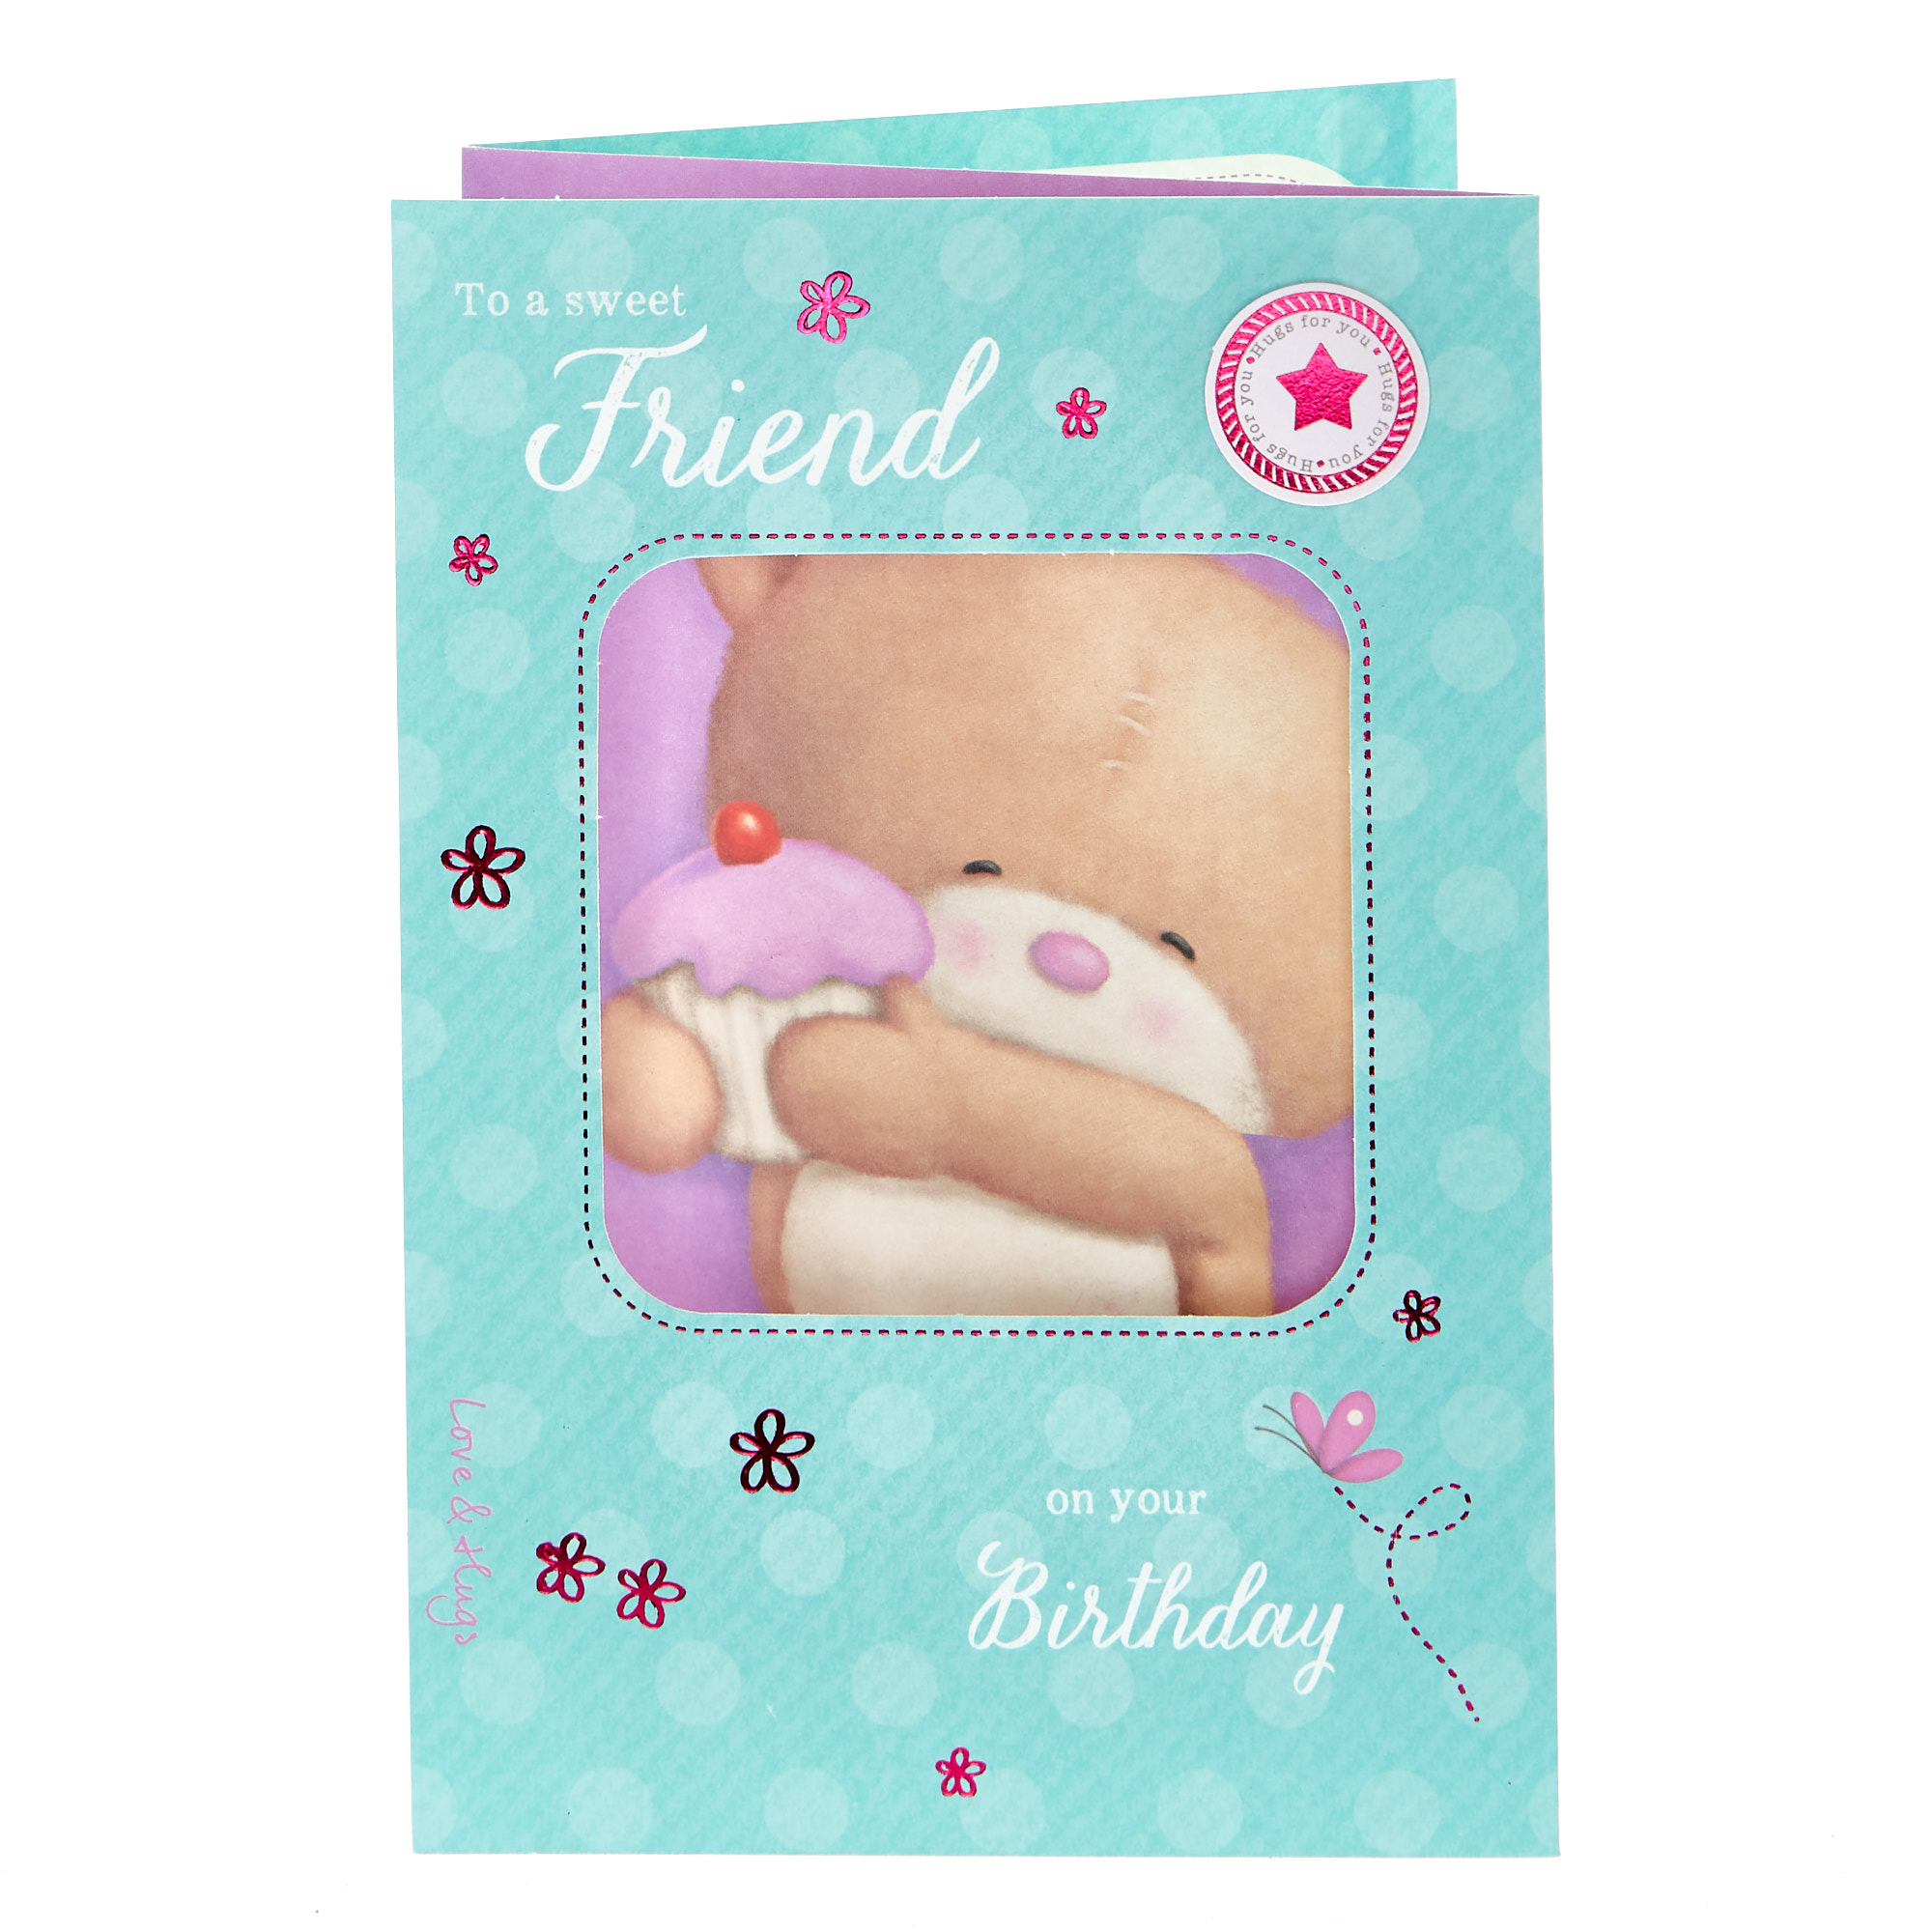 Hugs Bear Birthday Card - To A Sweet Friend 